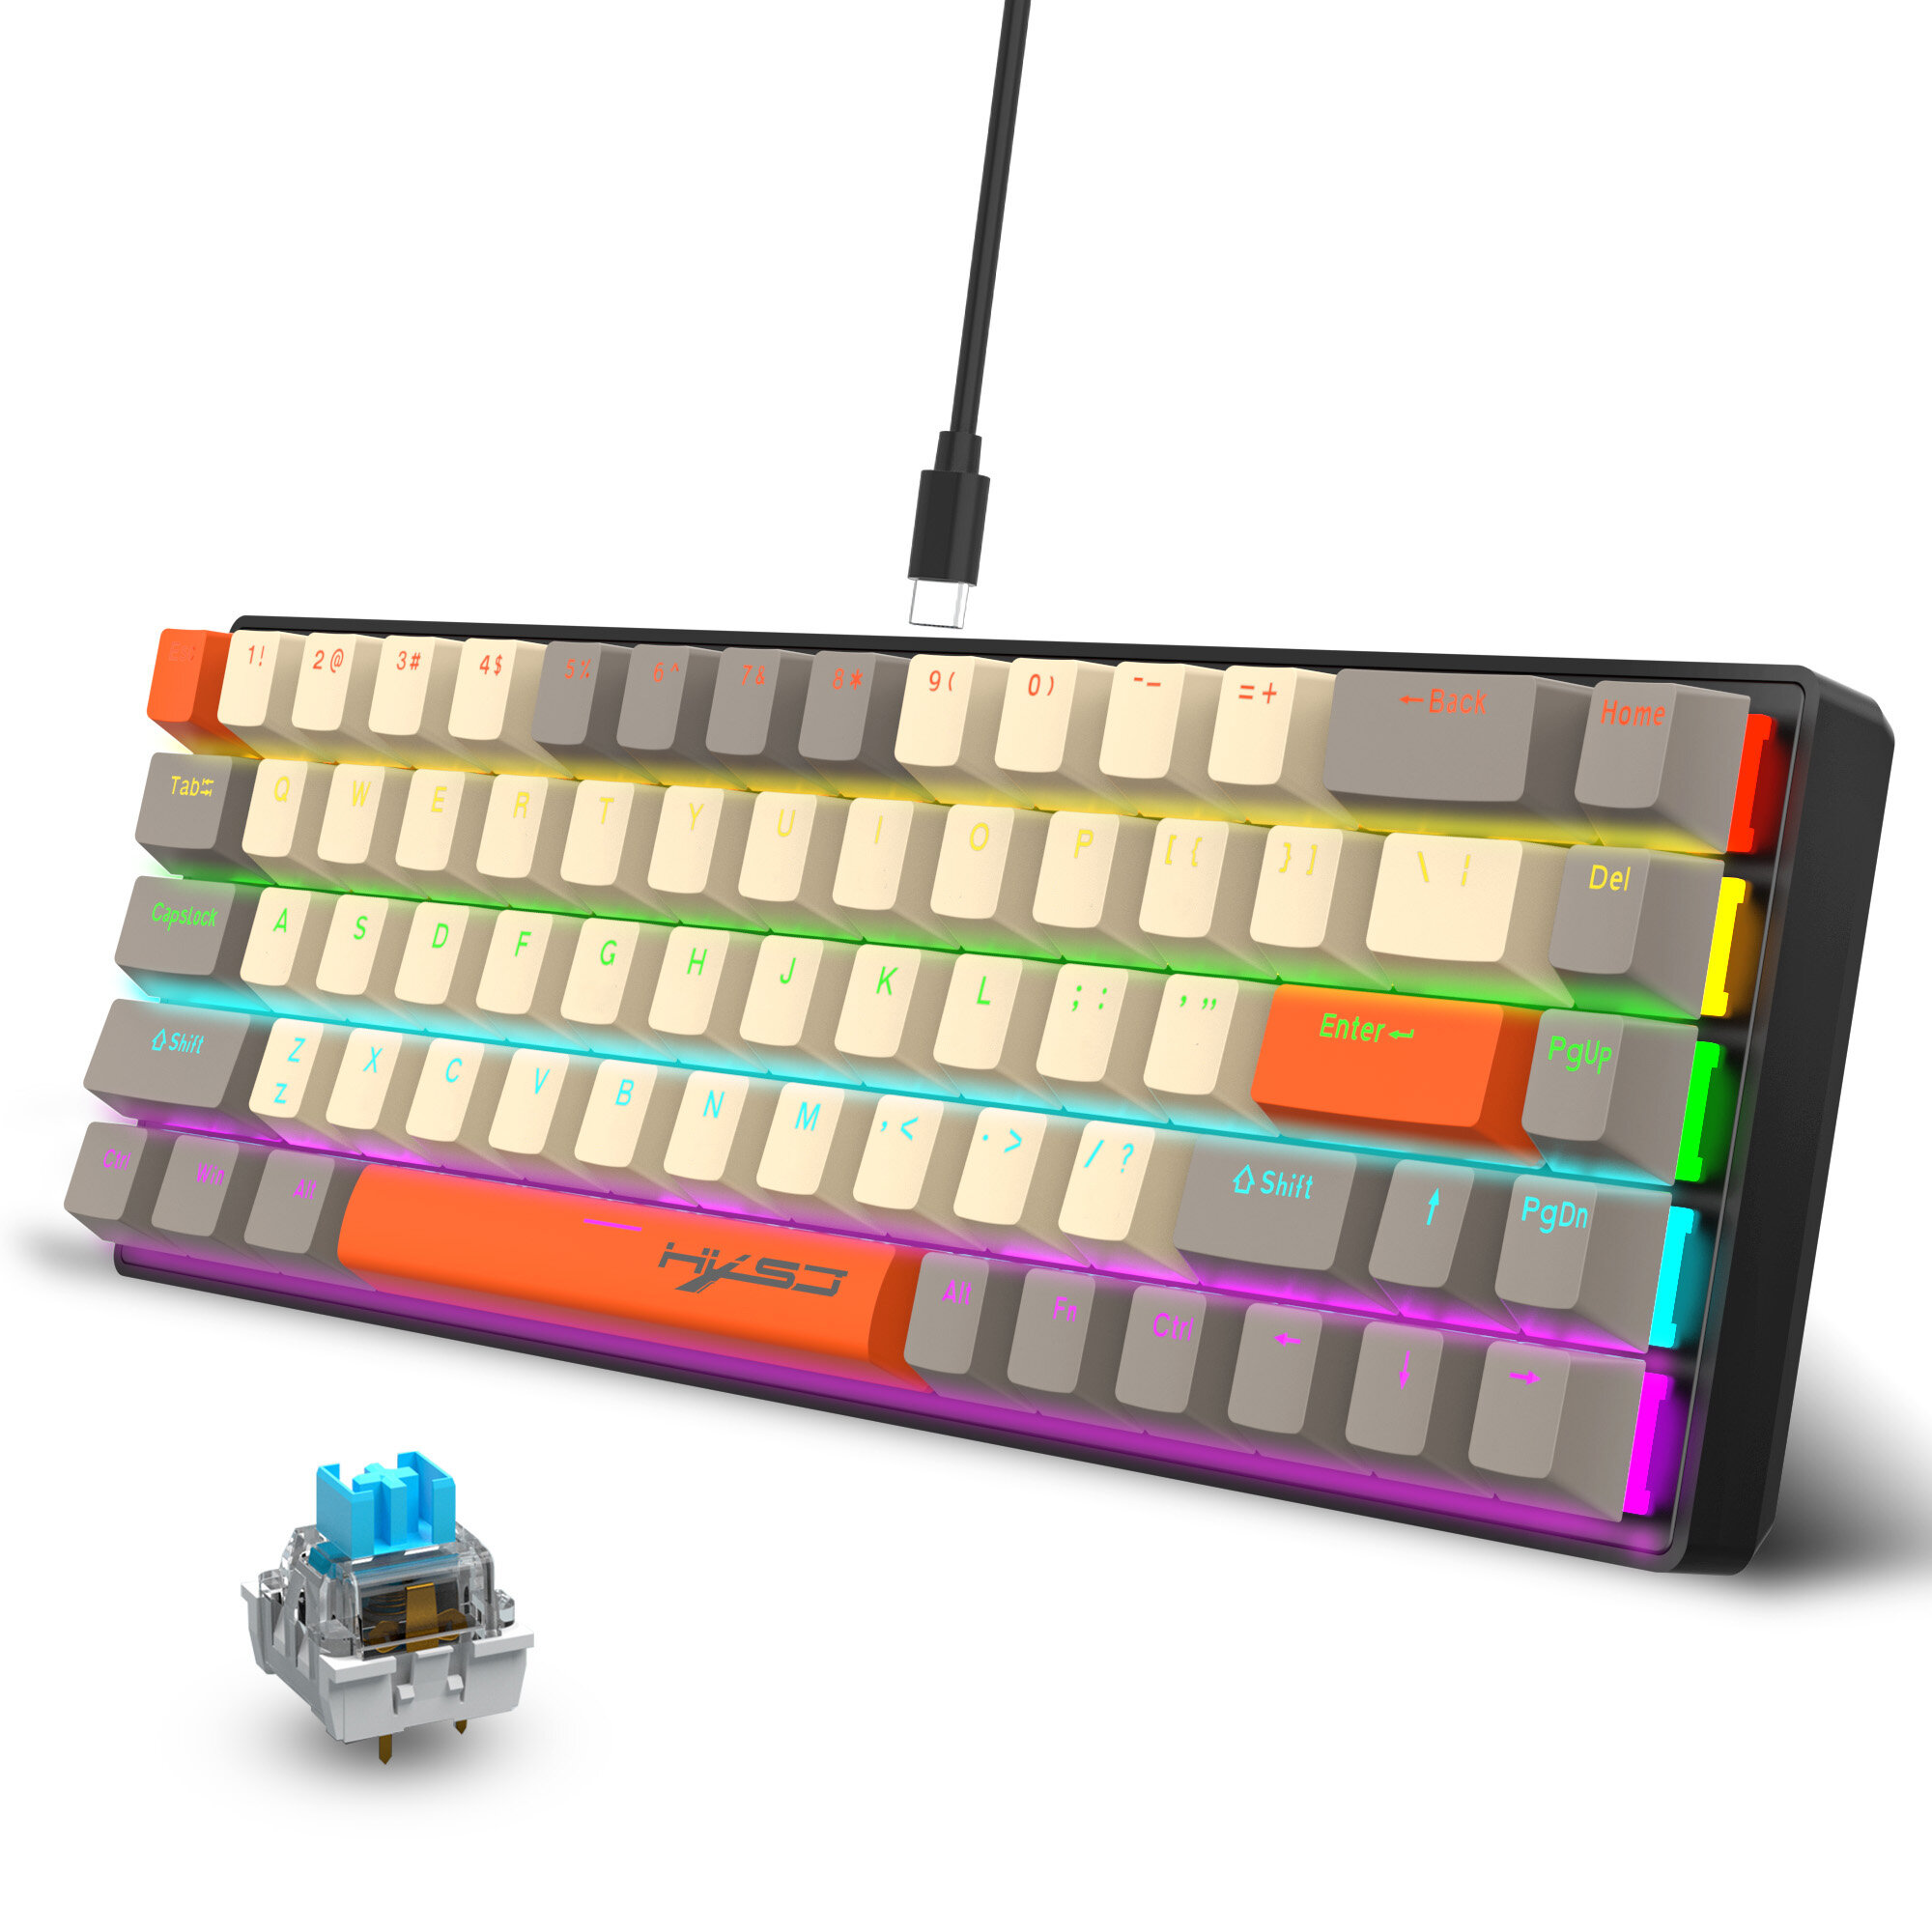 

HXSJ K88 68 Keys Wired Mechanical Gaming Keyboard Blue Switch RGB USB Type-C 60% Layout Gaming Keyboard for PC Laptop Co